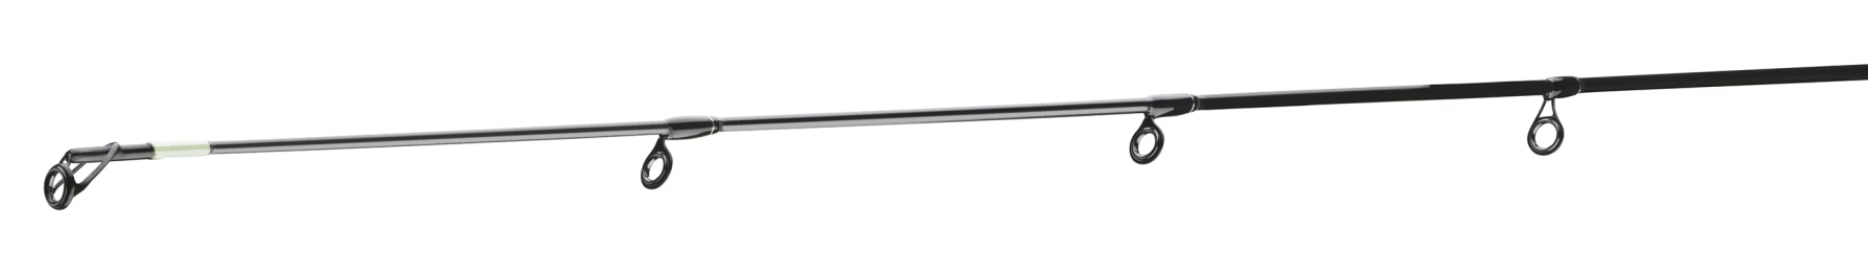 Daiwa Ninja Mobile Spin rod 2.45m (3-pieces)